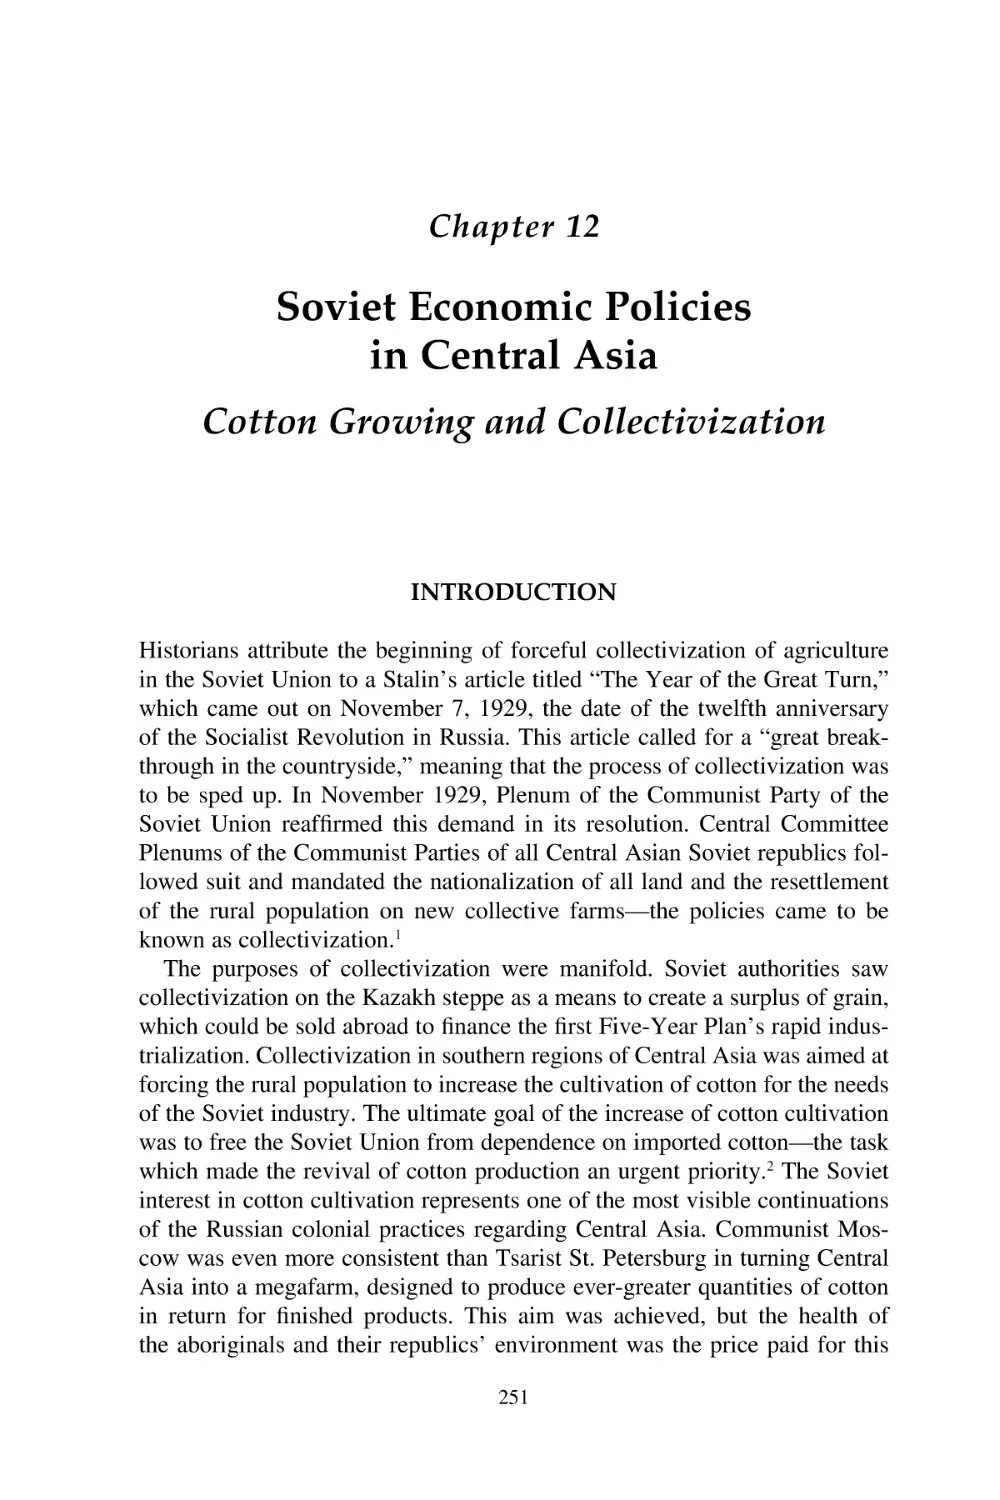 12. Soviet Economic Policies in Central Asia